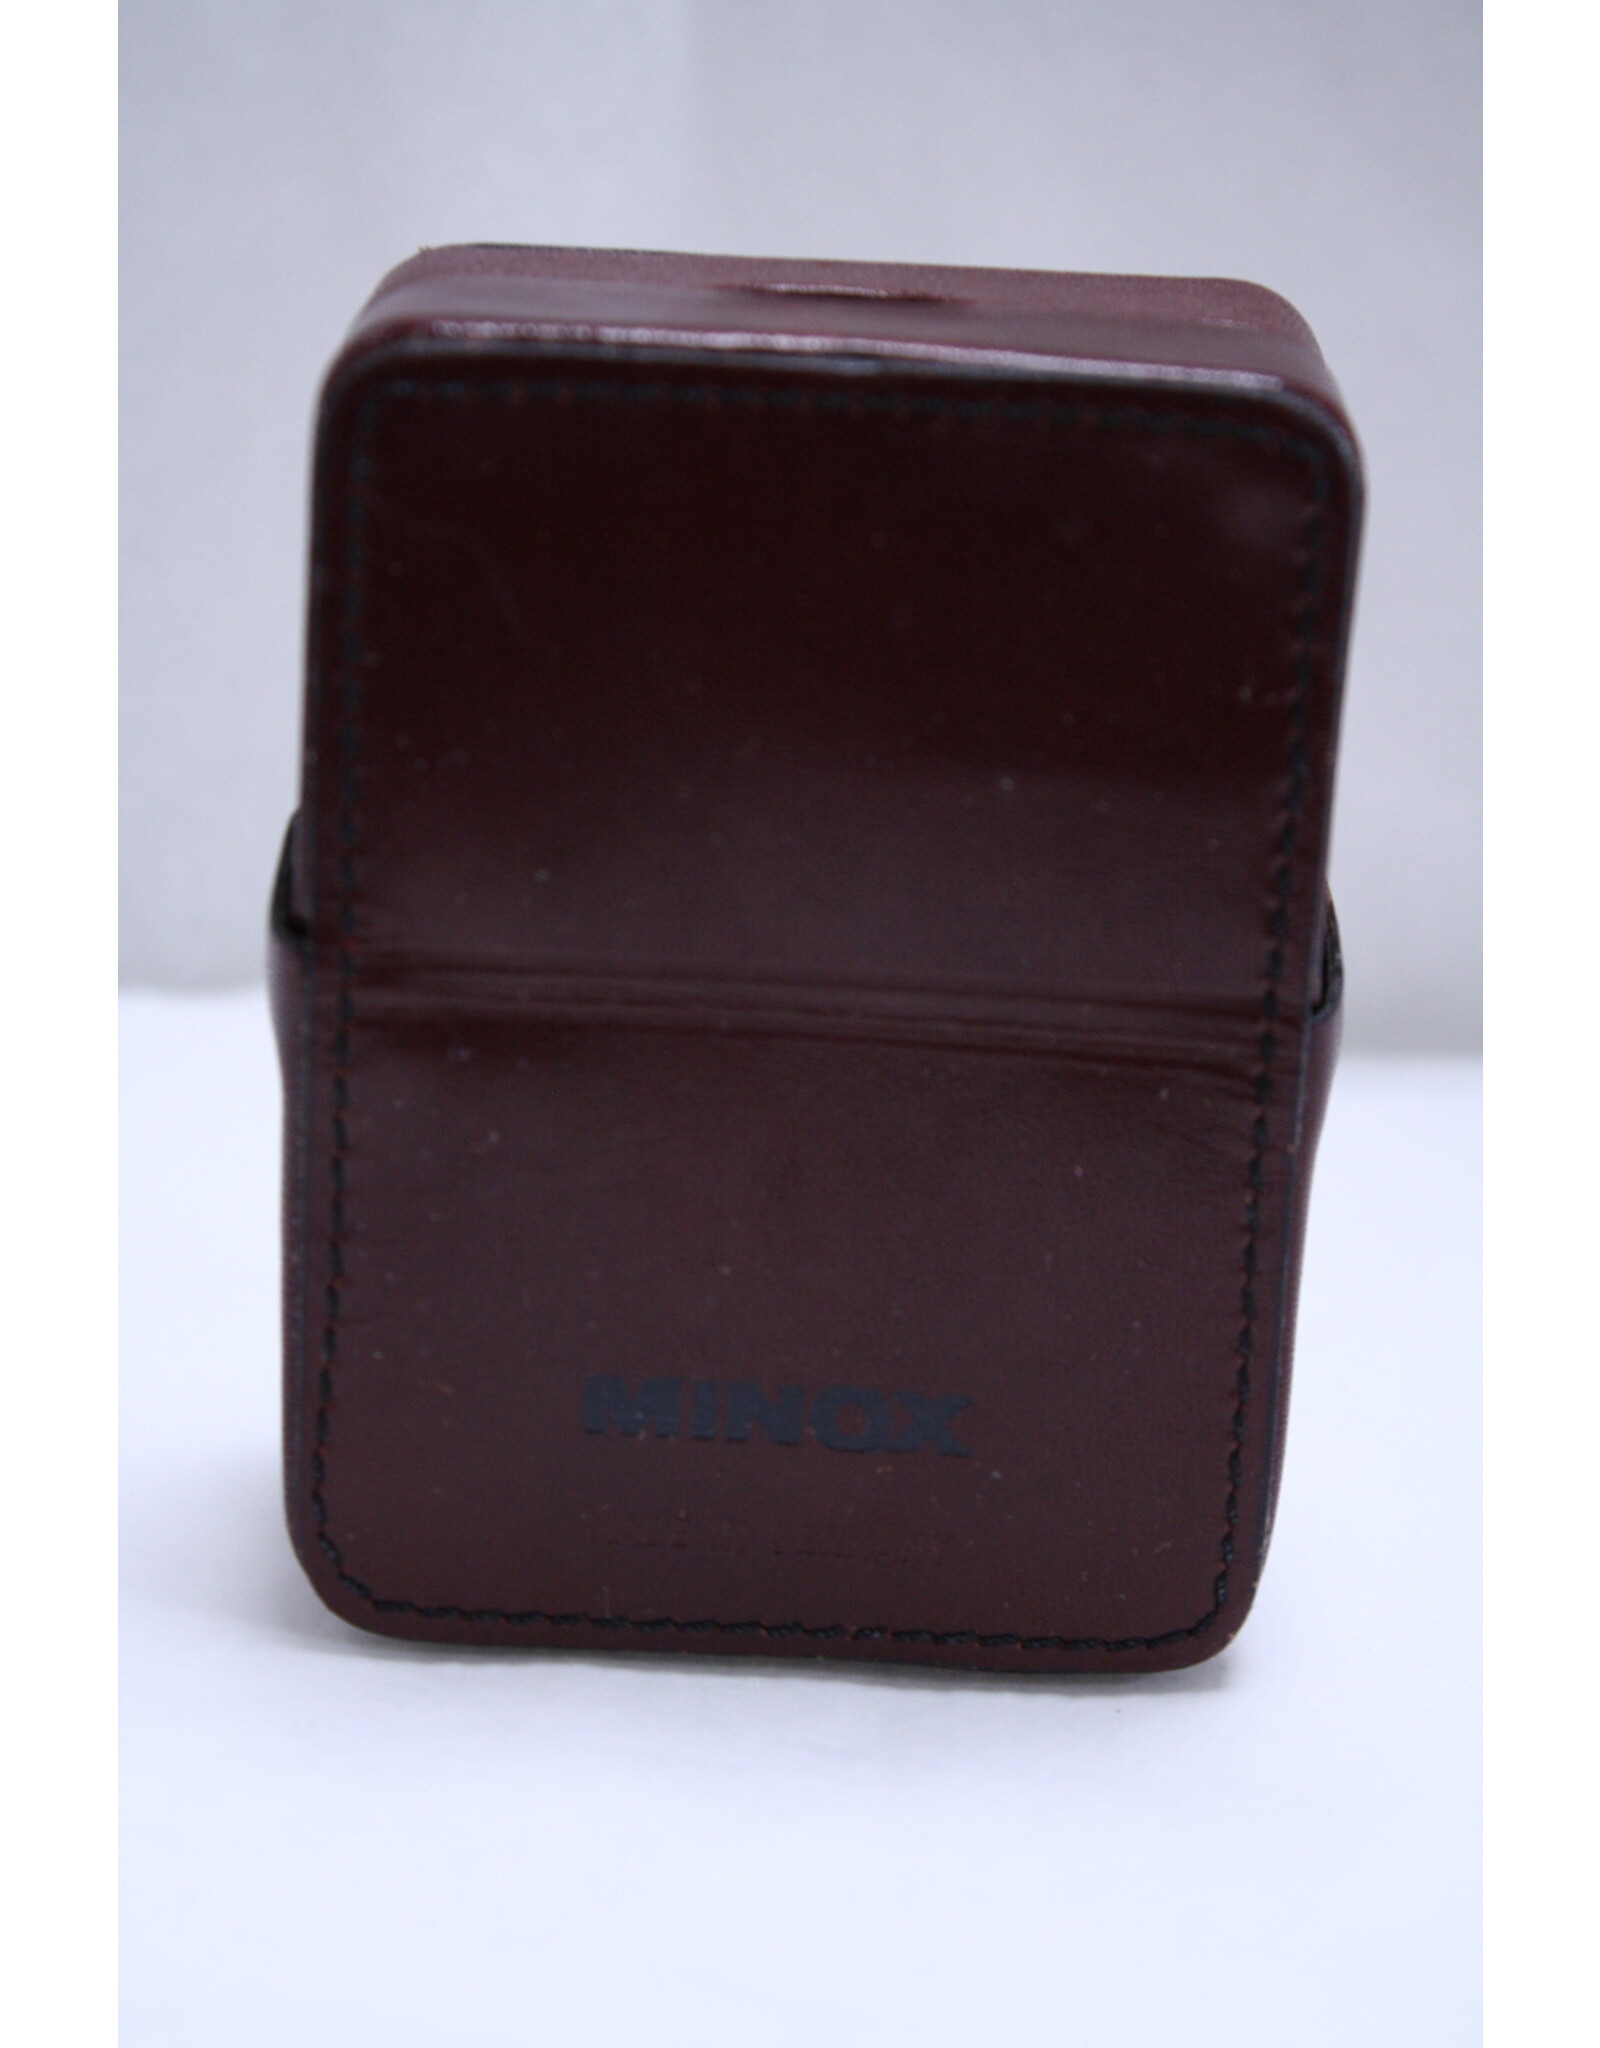 Minox Minox Hinged Small Leather Case (RARE!)